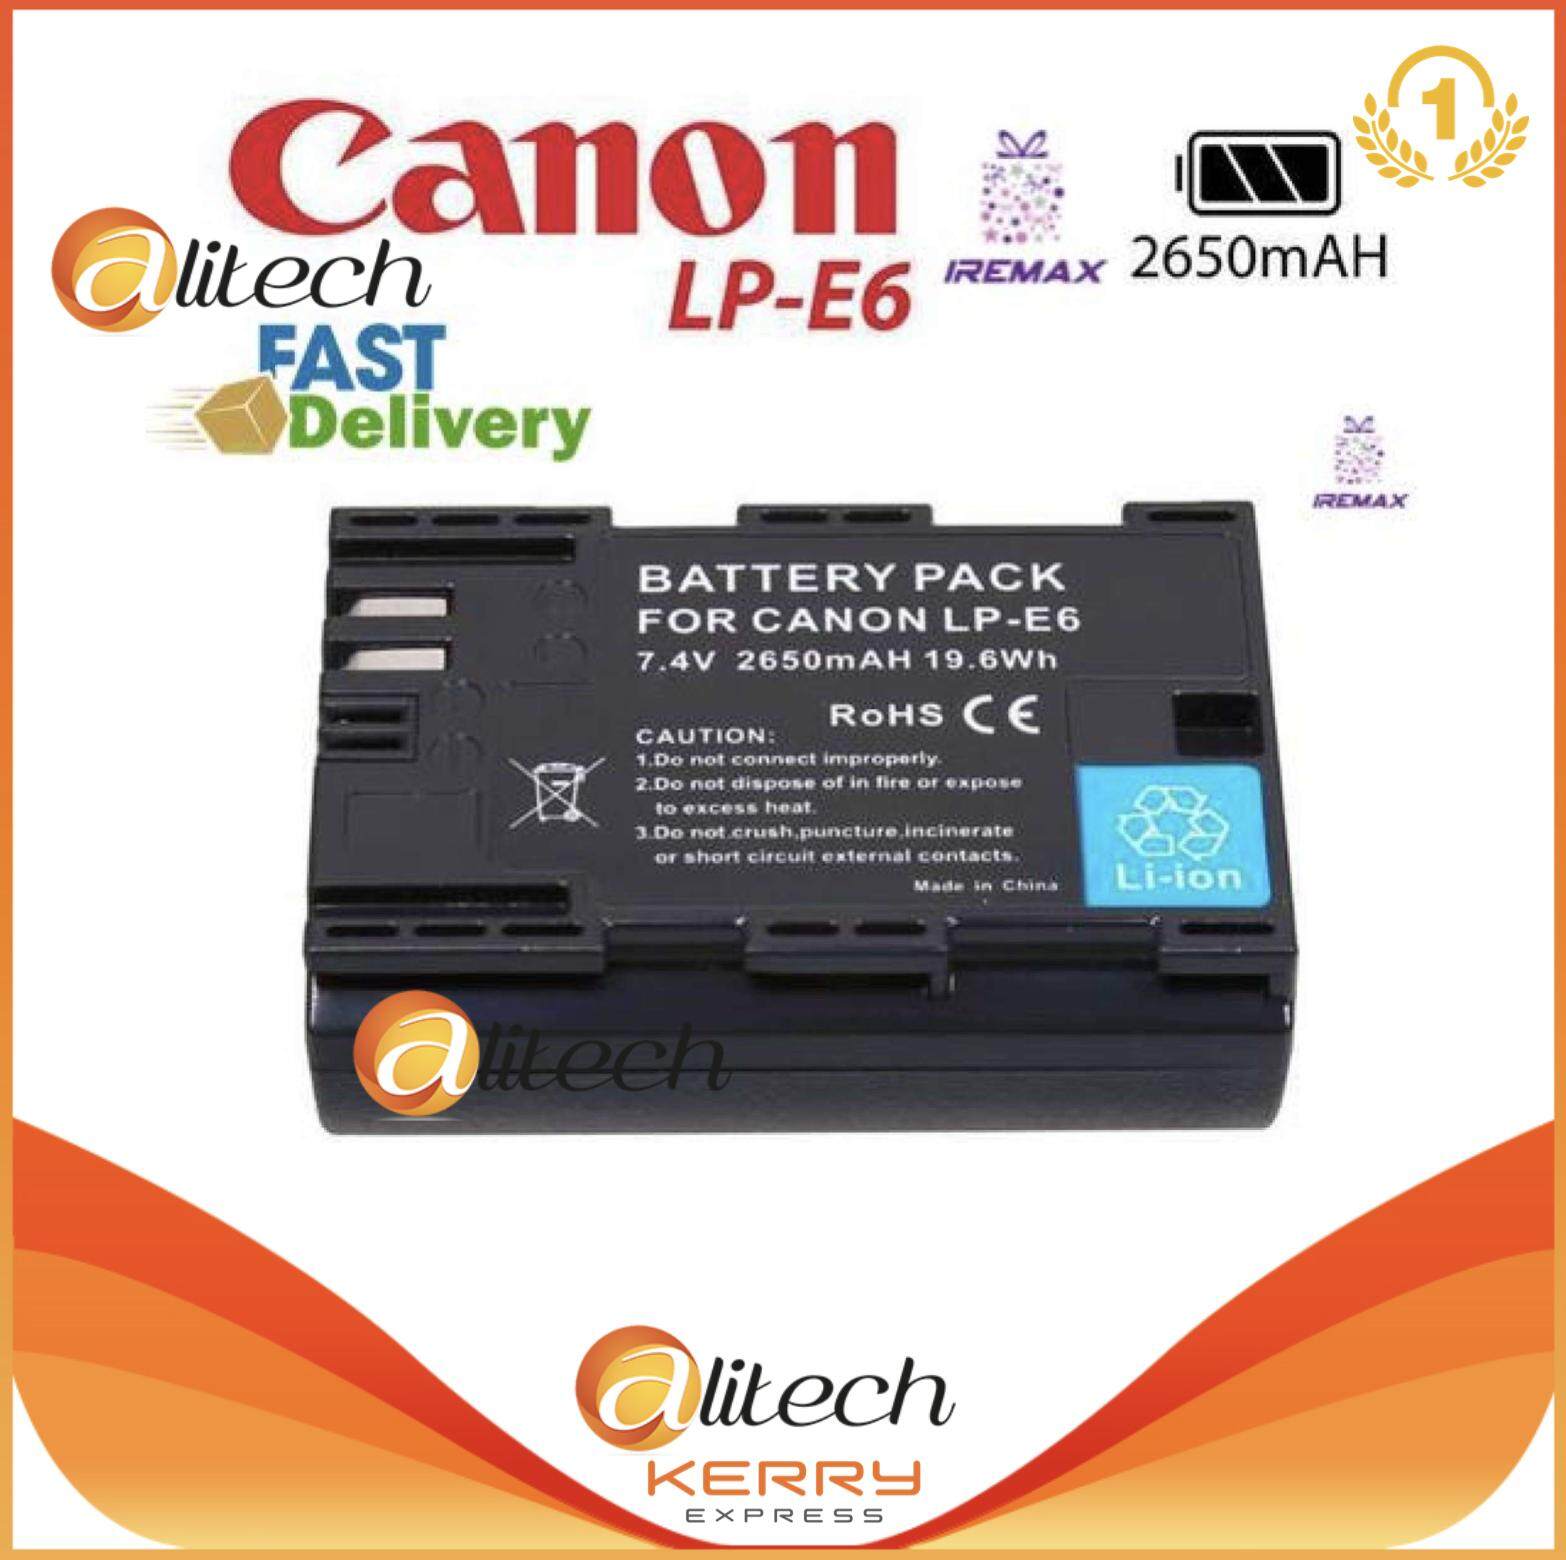 Alitech แบตเตอรี่กล้อง Canon LP E6 Li-ion Battery LP-E6 LPE6 2650mAh for Canon 6D 5D Mark III 5D Mark II 7D 60D Camera